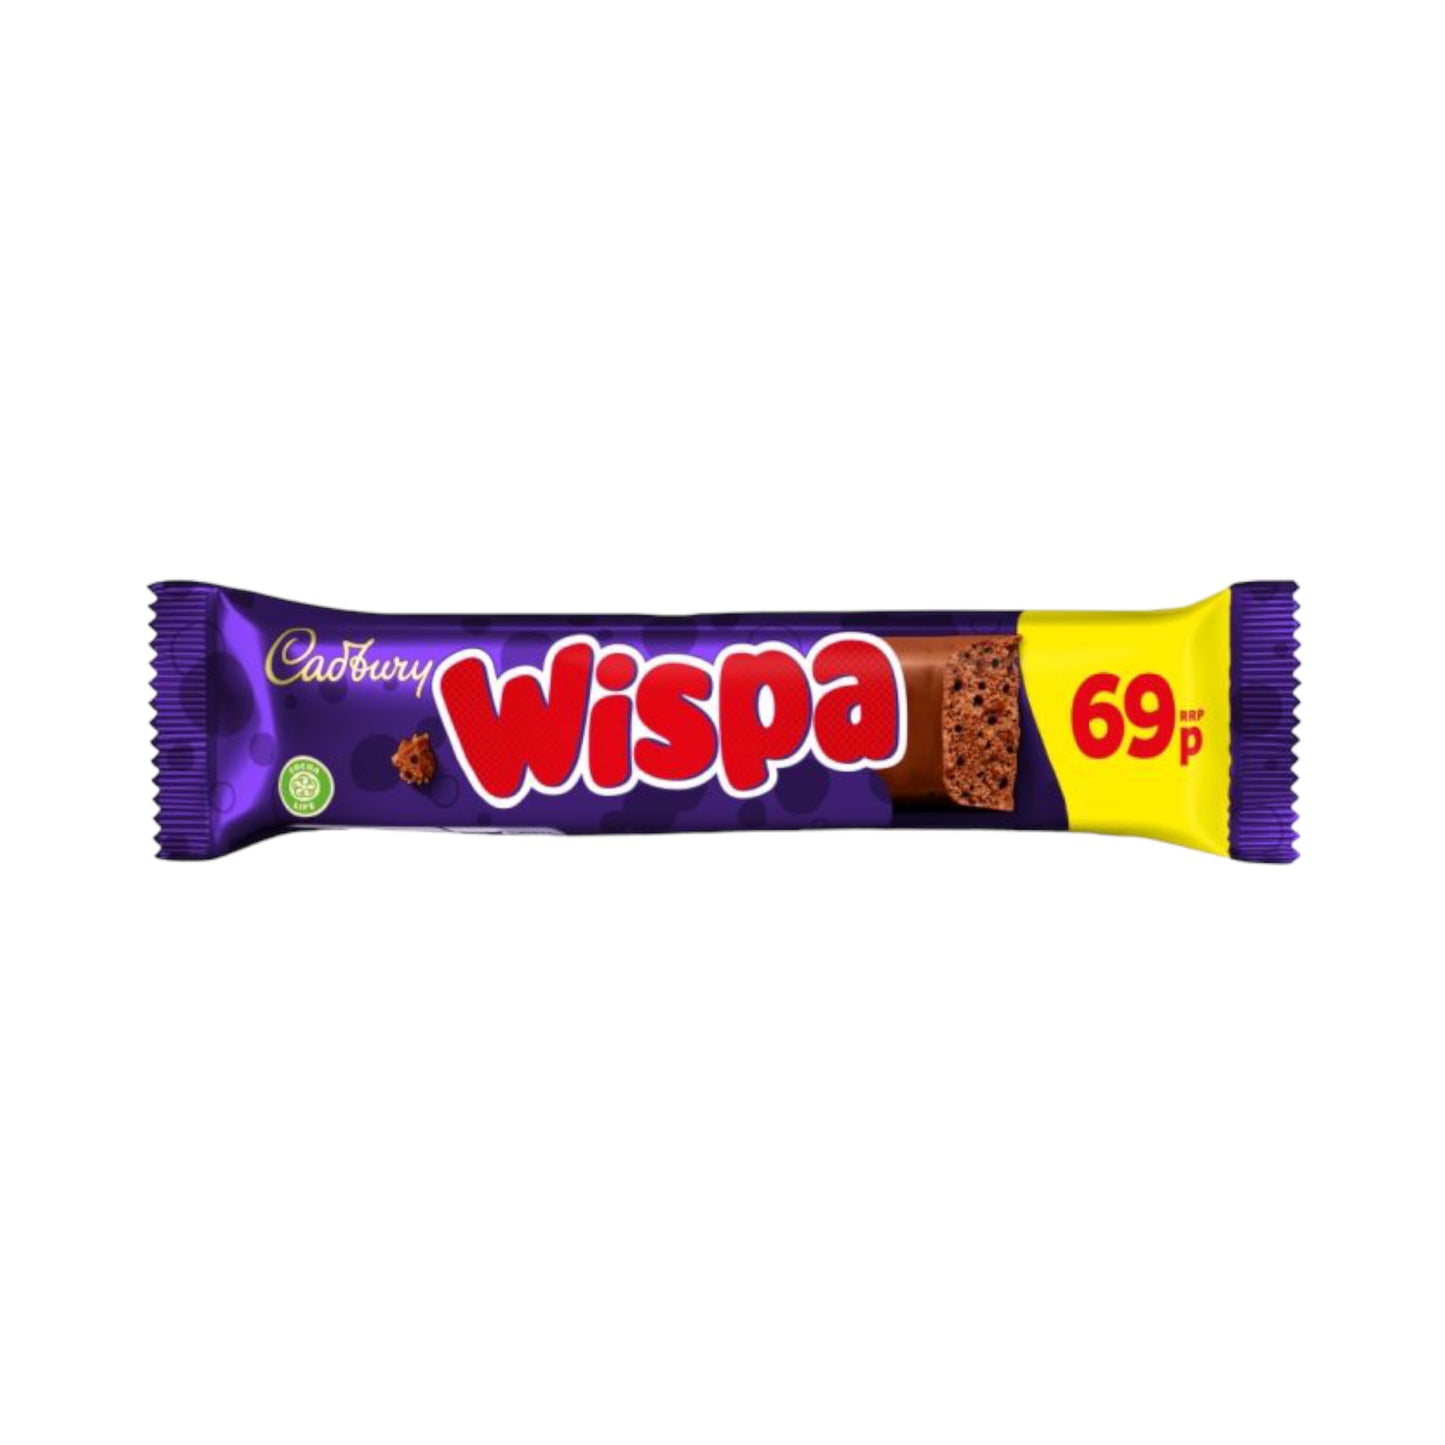 Cadbury Wispa Chocolate Bar - 36g (PMP 69p)